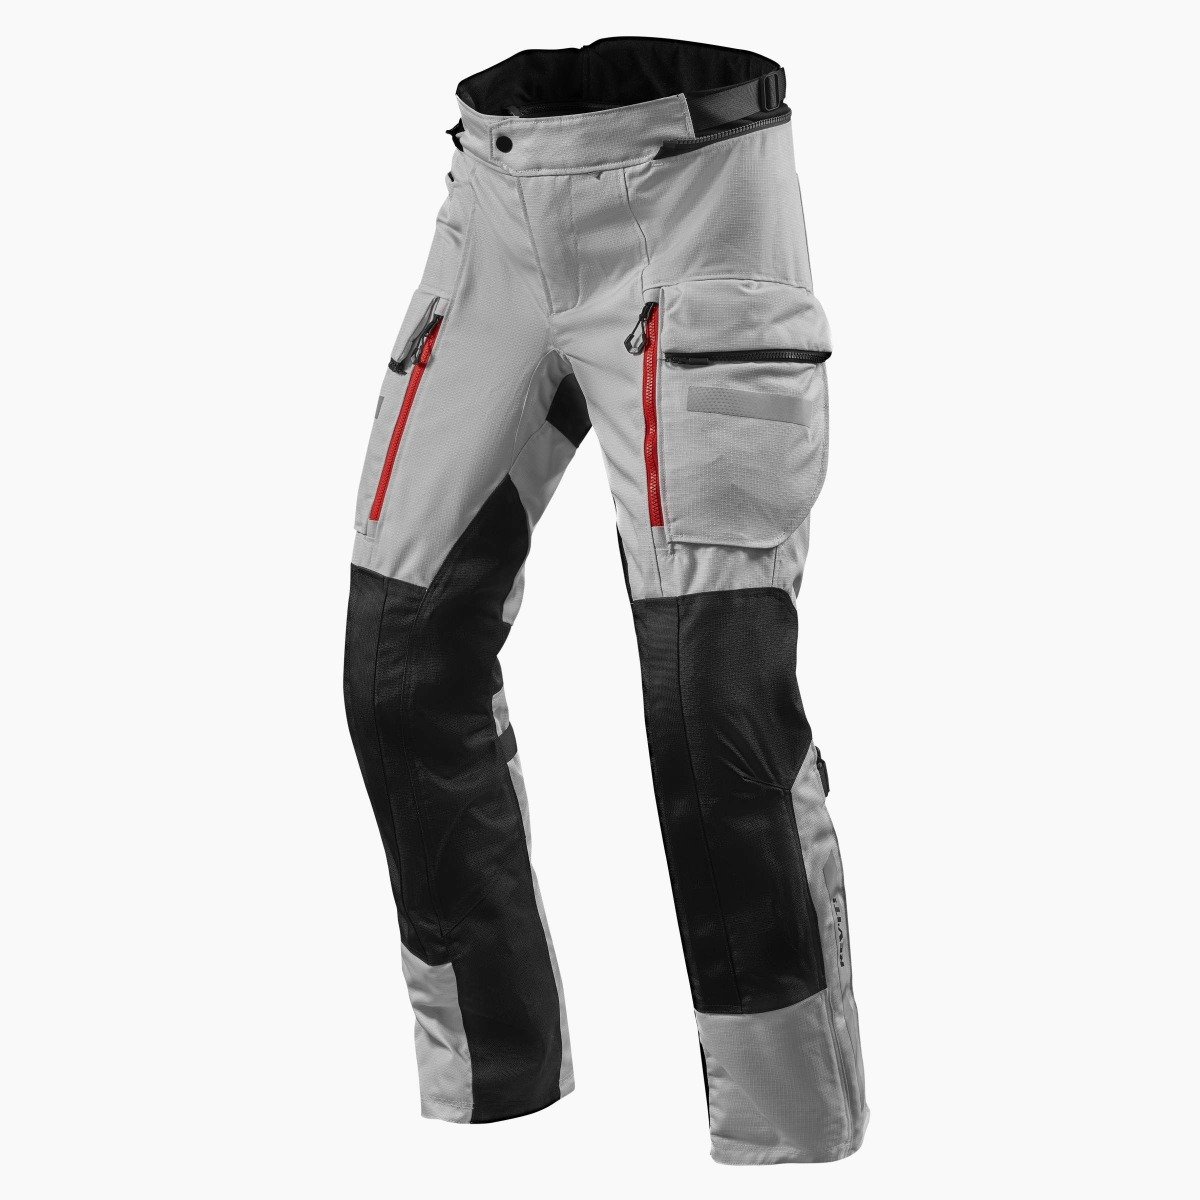 Image of REV'IT! Sand 4 H2O Standard Silver Black Motorcycle Pants Talla 3XL